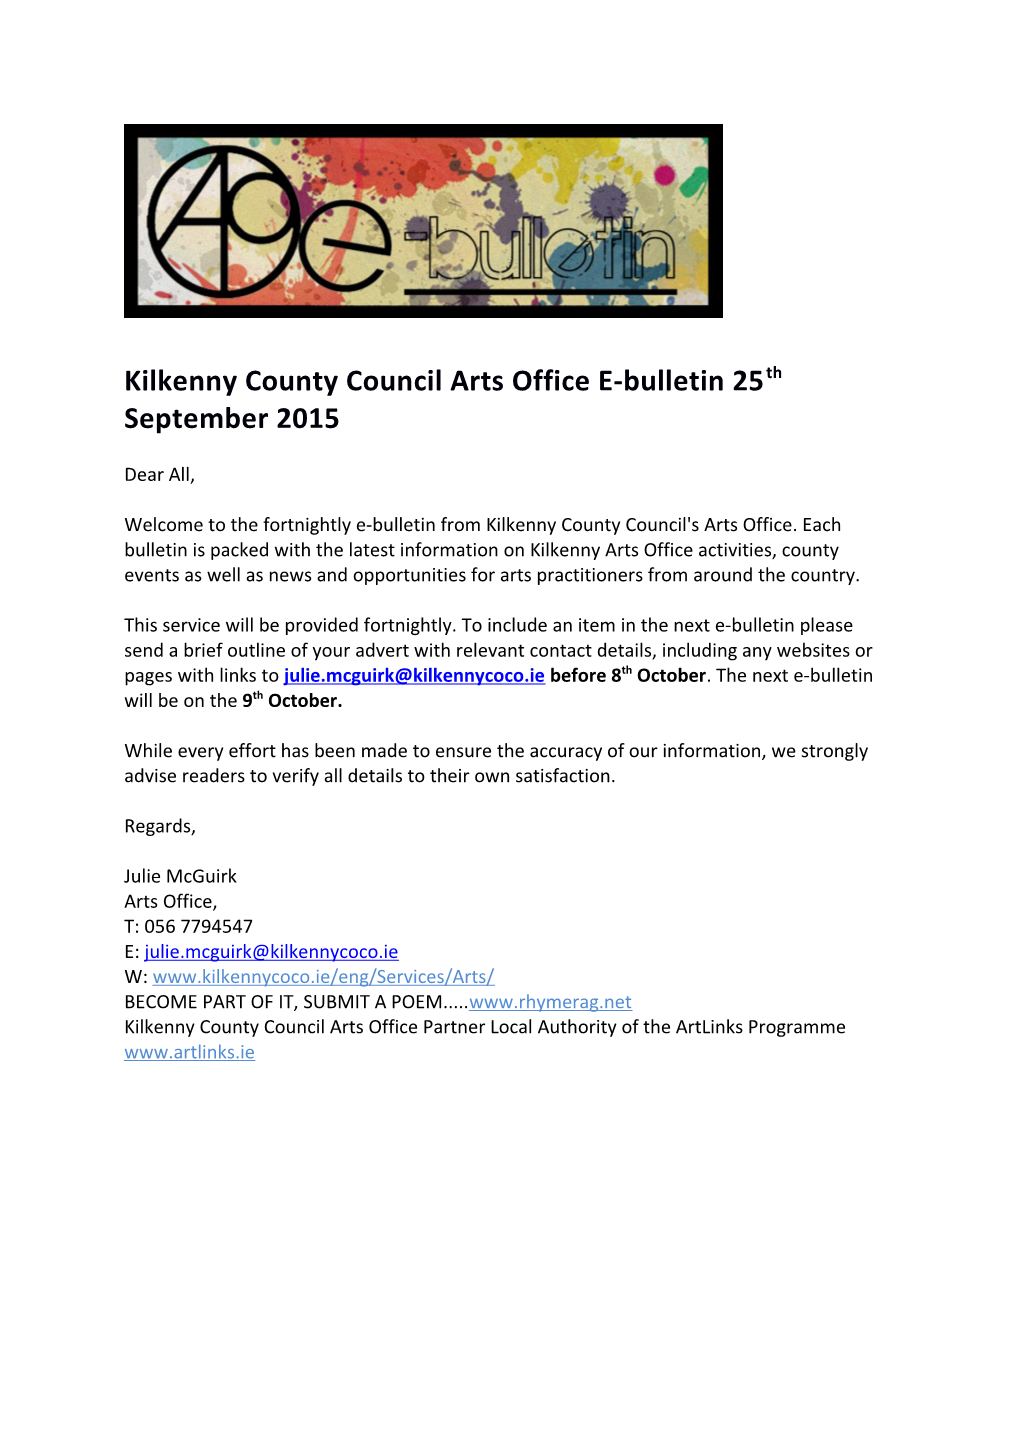 Kilkenny County Council Arts Office E-Bulletin 25Th September 2015